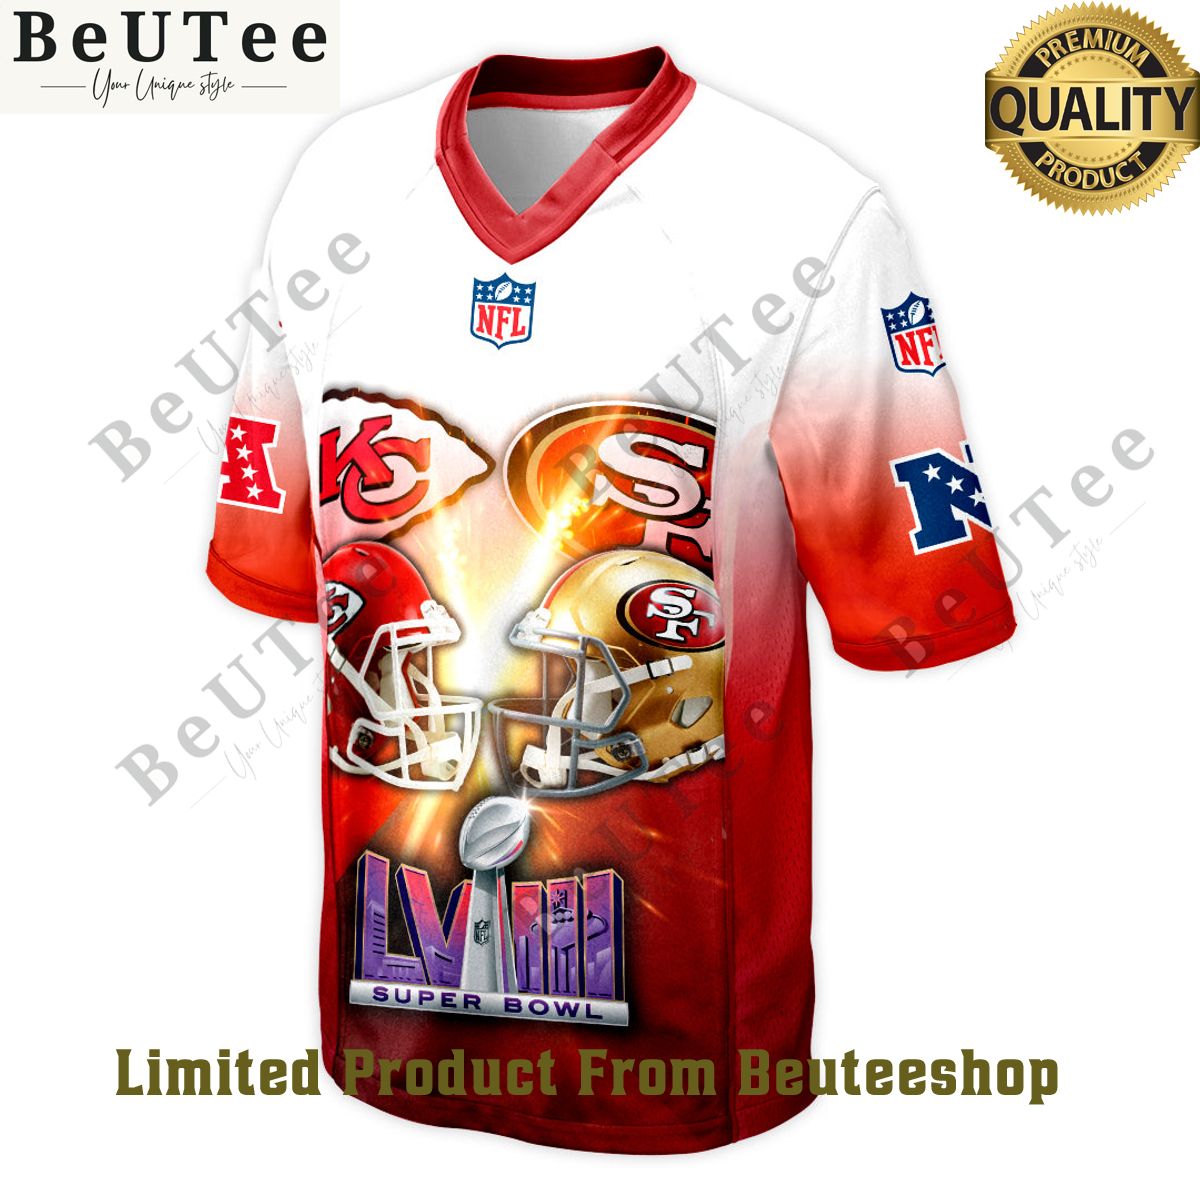 nfl chiefs vs sf 49ers especial edition super bowl lviii jersey shirt 1 mFqUk.jpg